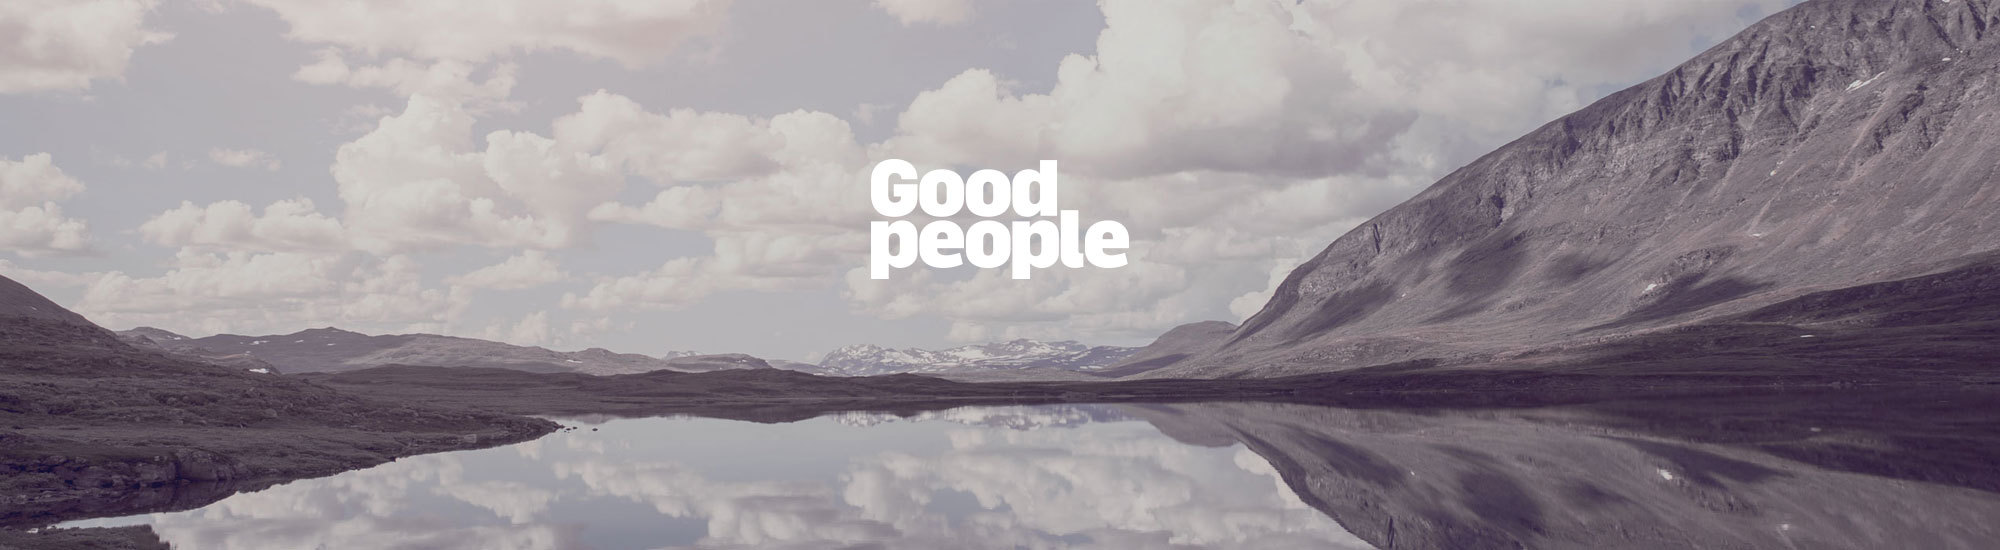 Good people banner